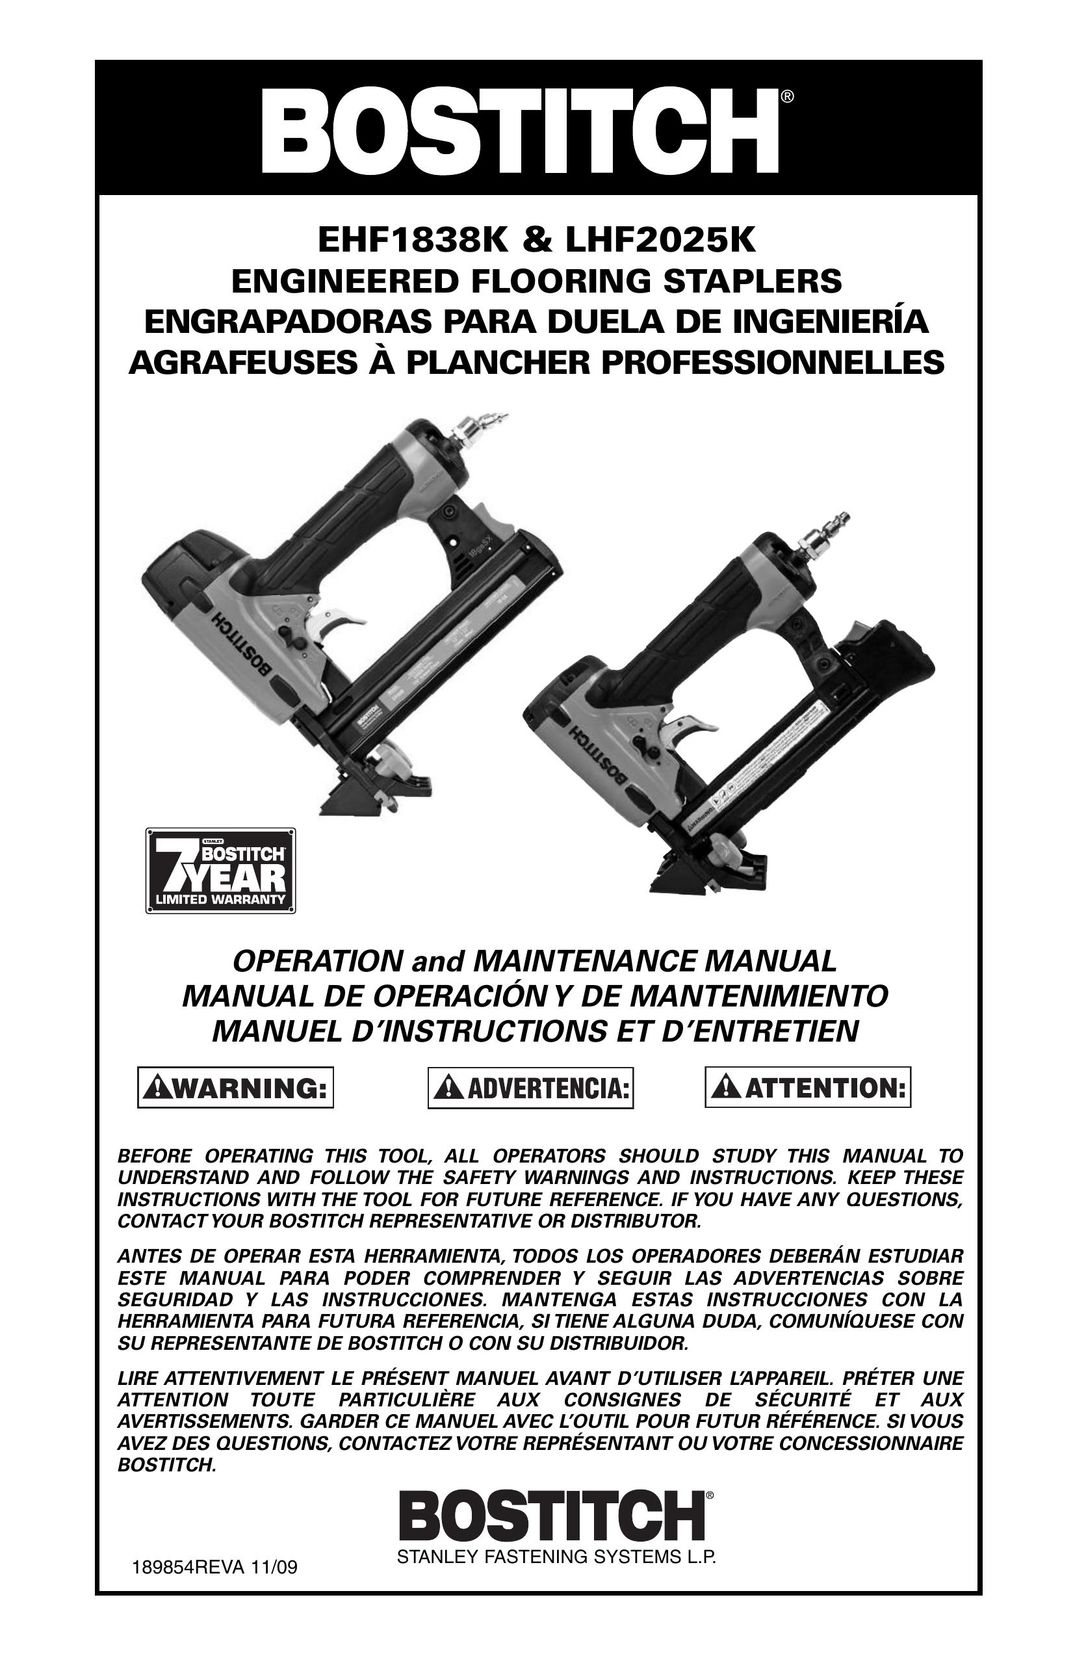 Bostitch EHF1838K Staple Gun User Manual